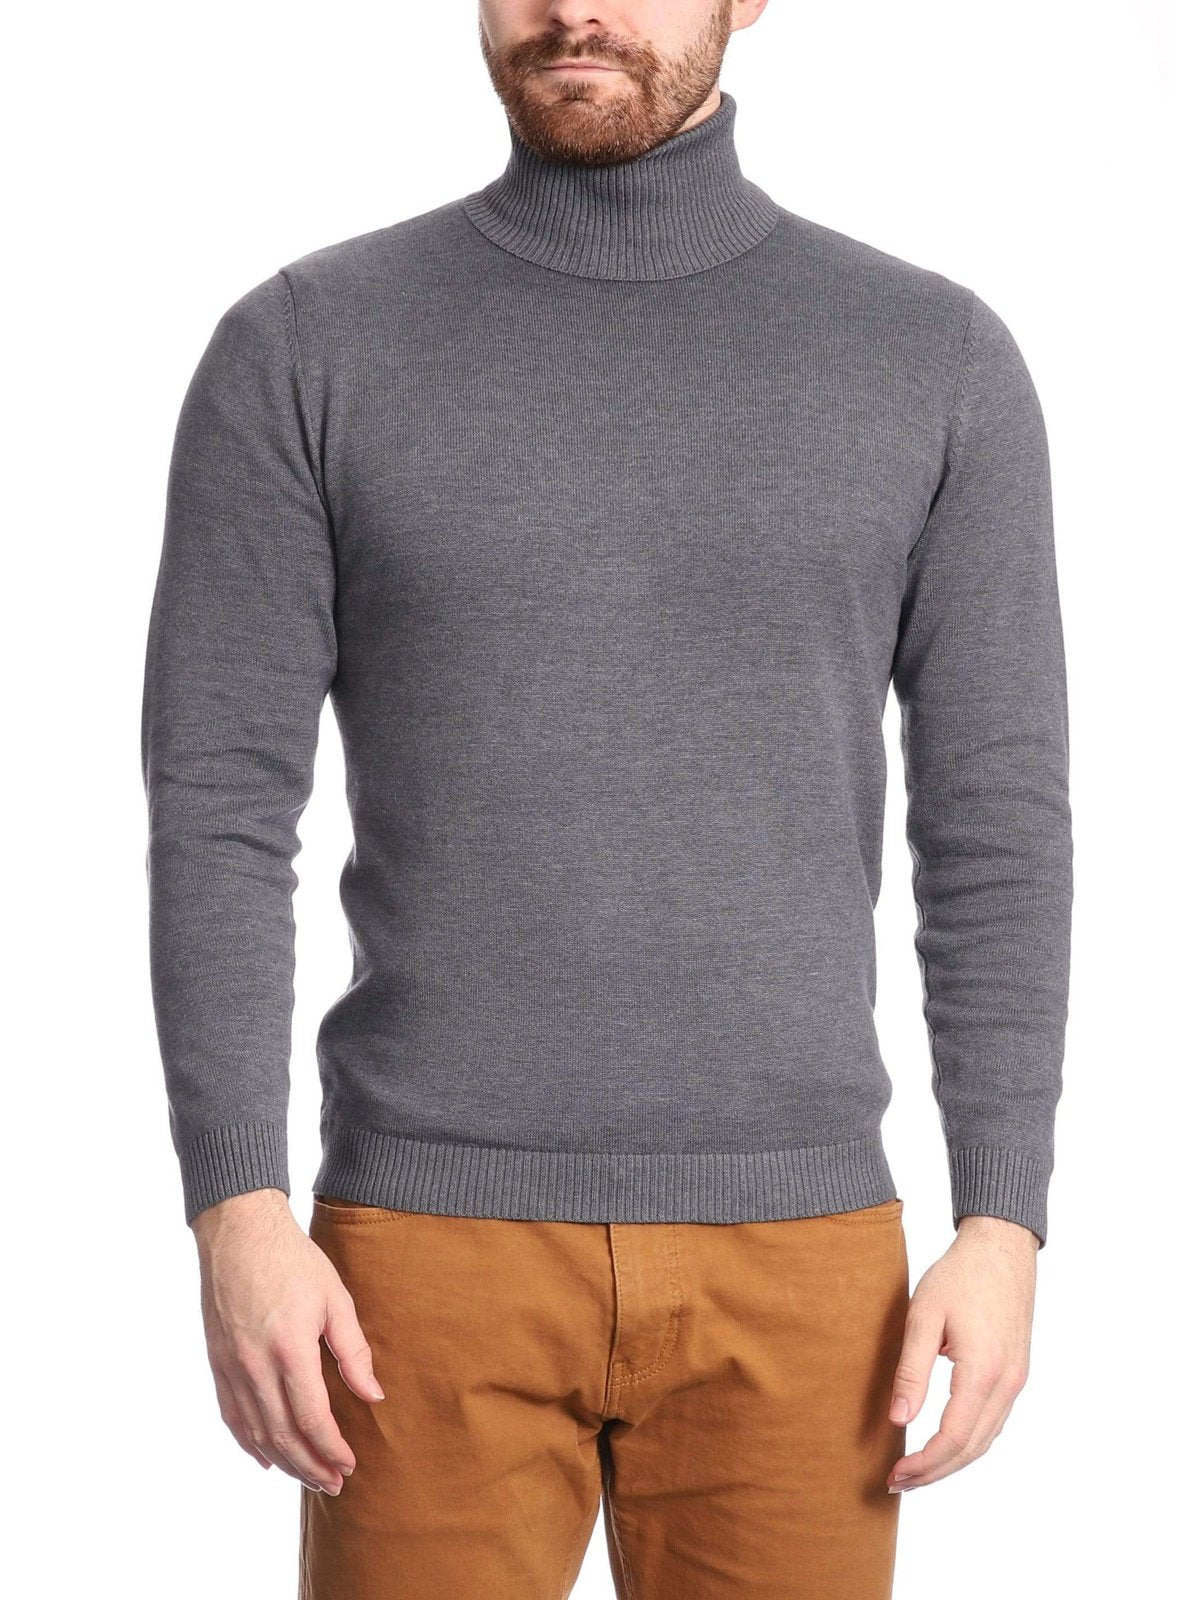 Arthur Black Default Category Migrated Gray / 4XL Arthur Black Men's Solid Gray Pullover Cotton Blend Turtleneck Sweater Shirt